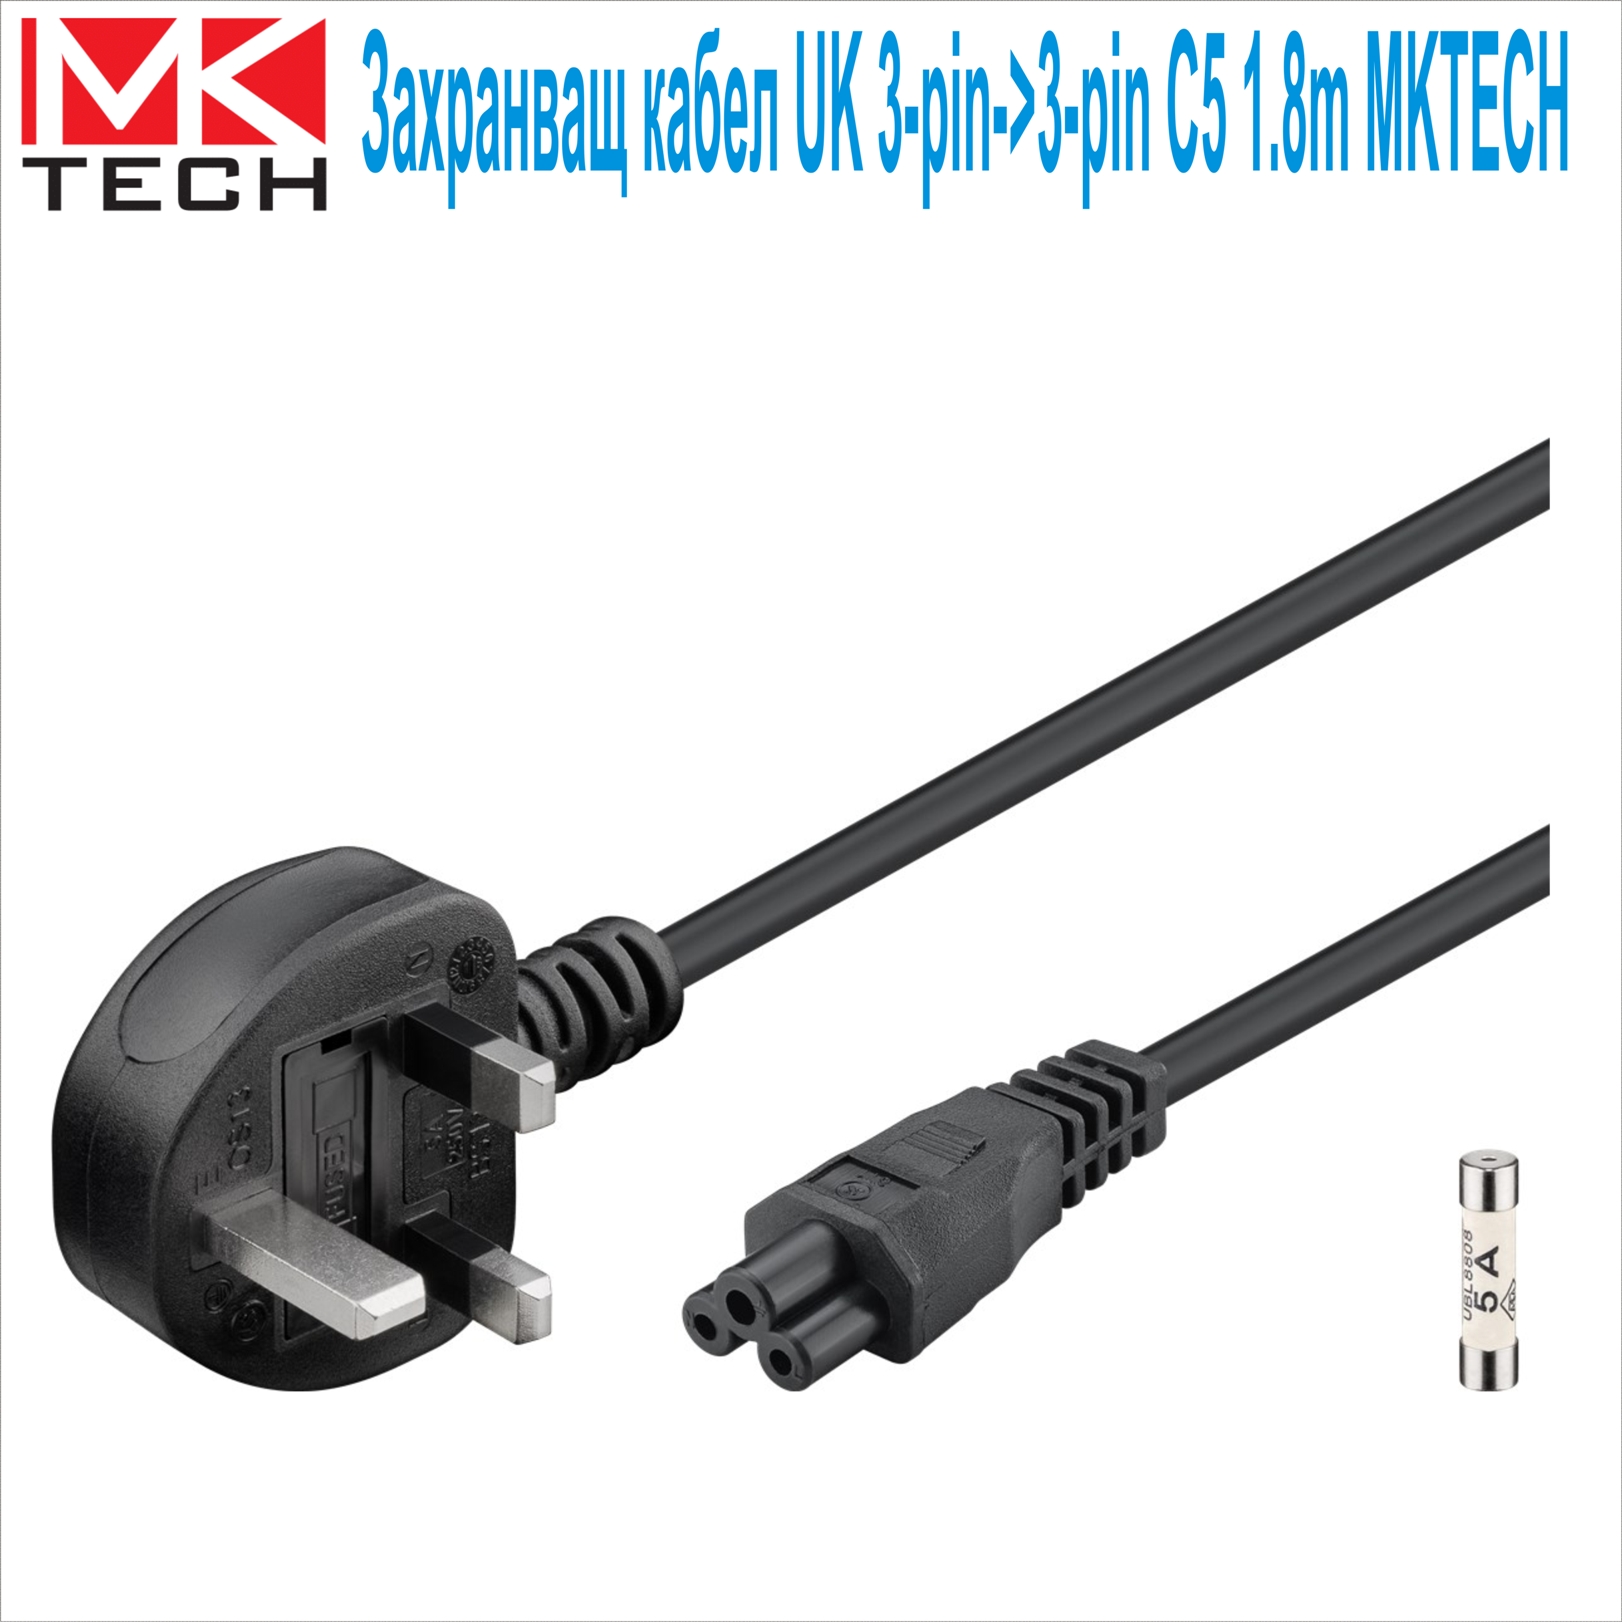 Захранващ кабел UK 3-pin->3-pin C5 1.8m MKTECH